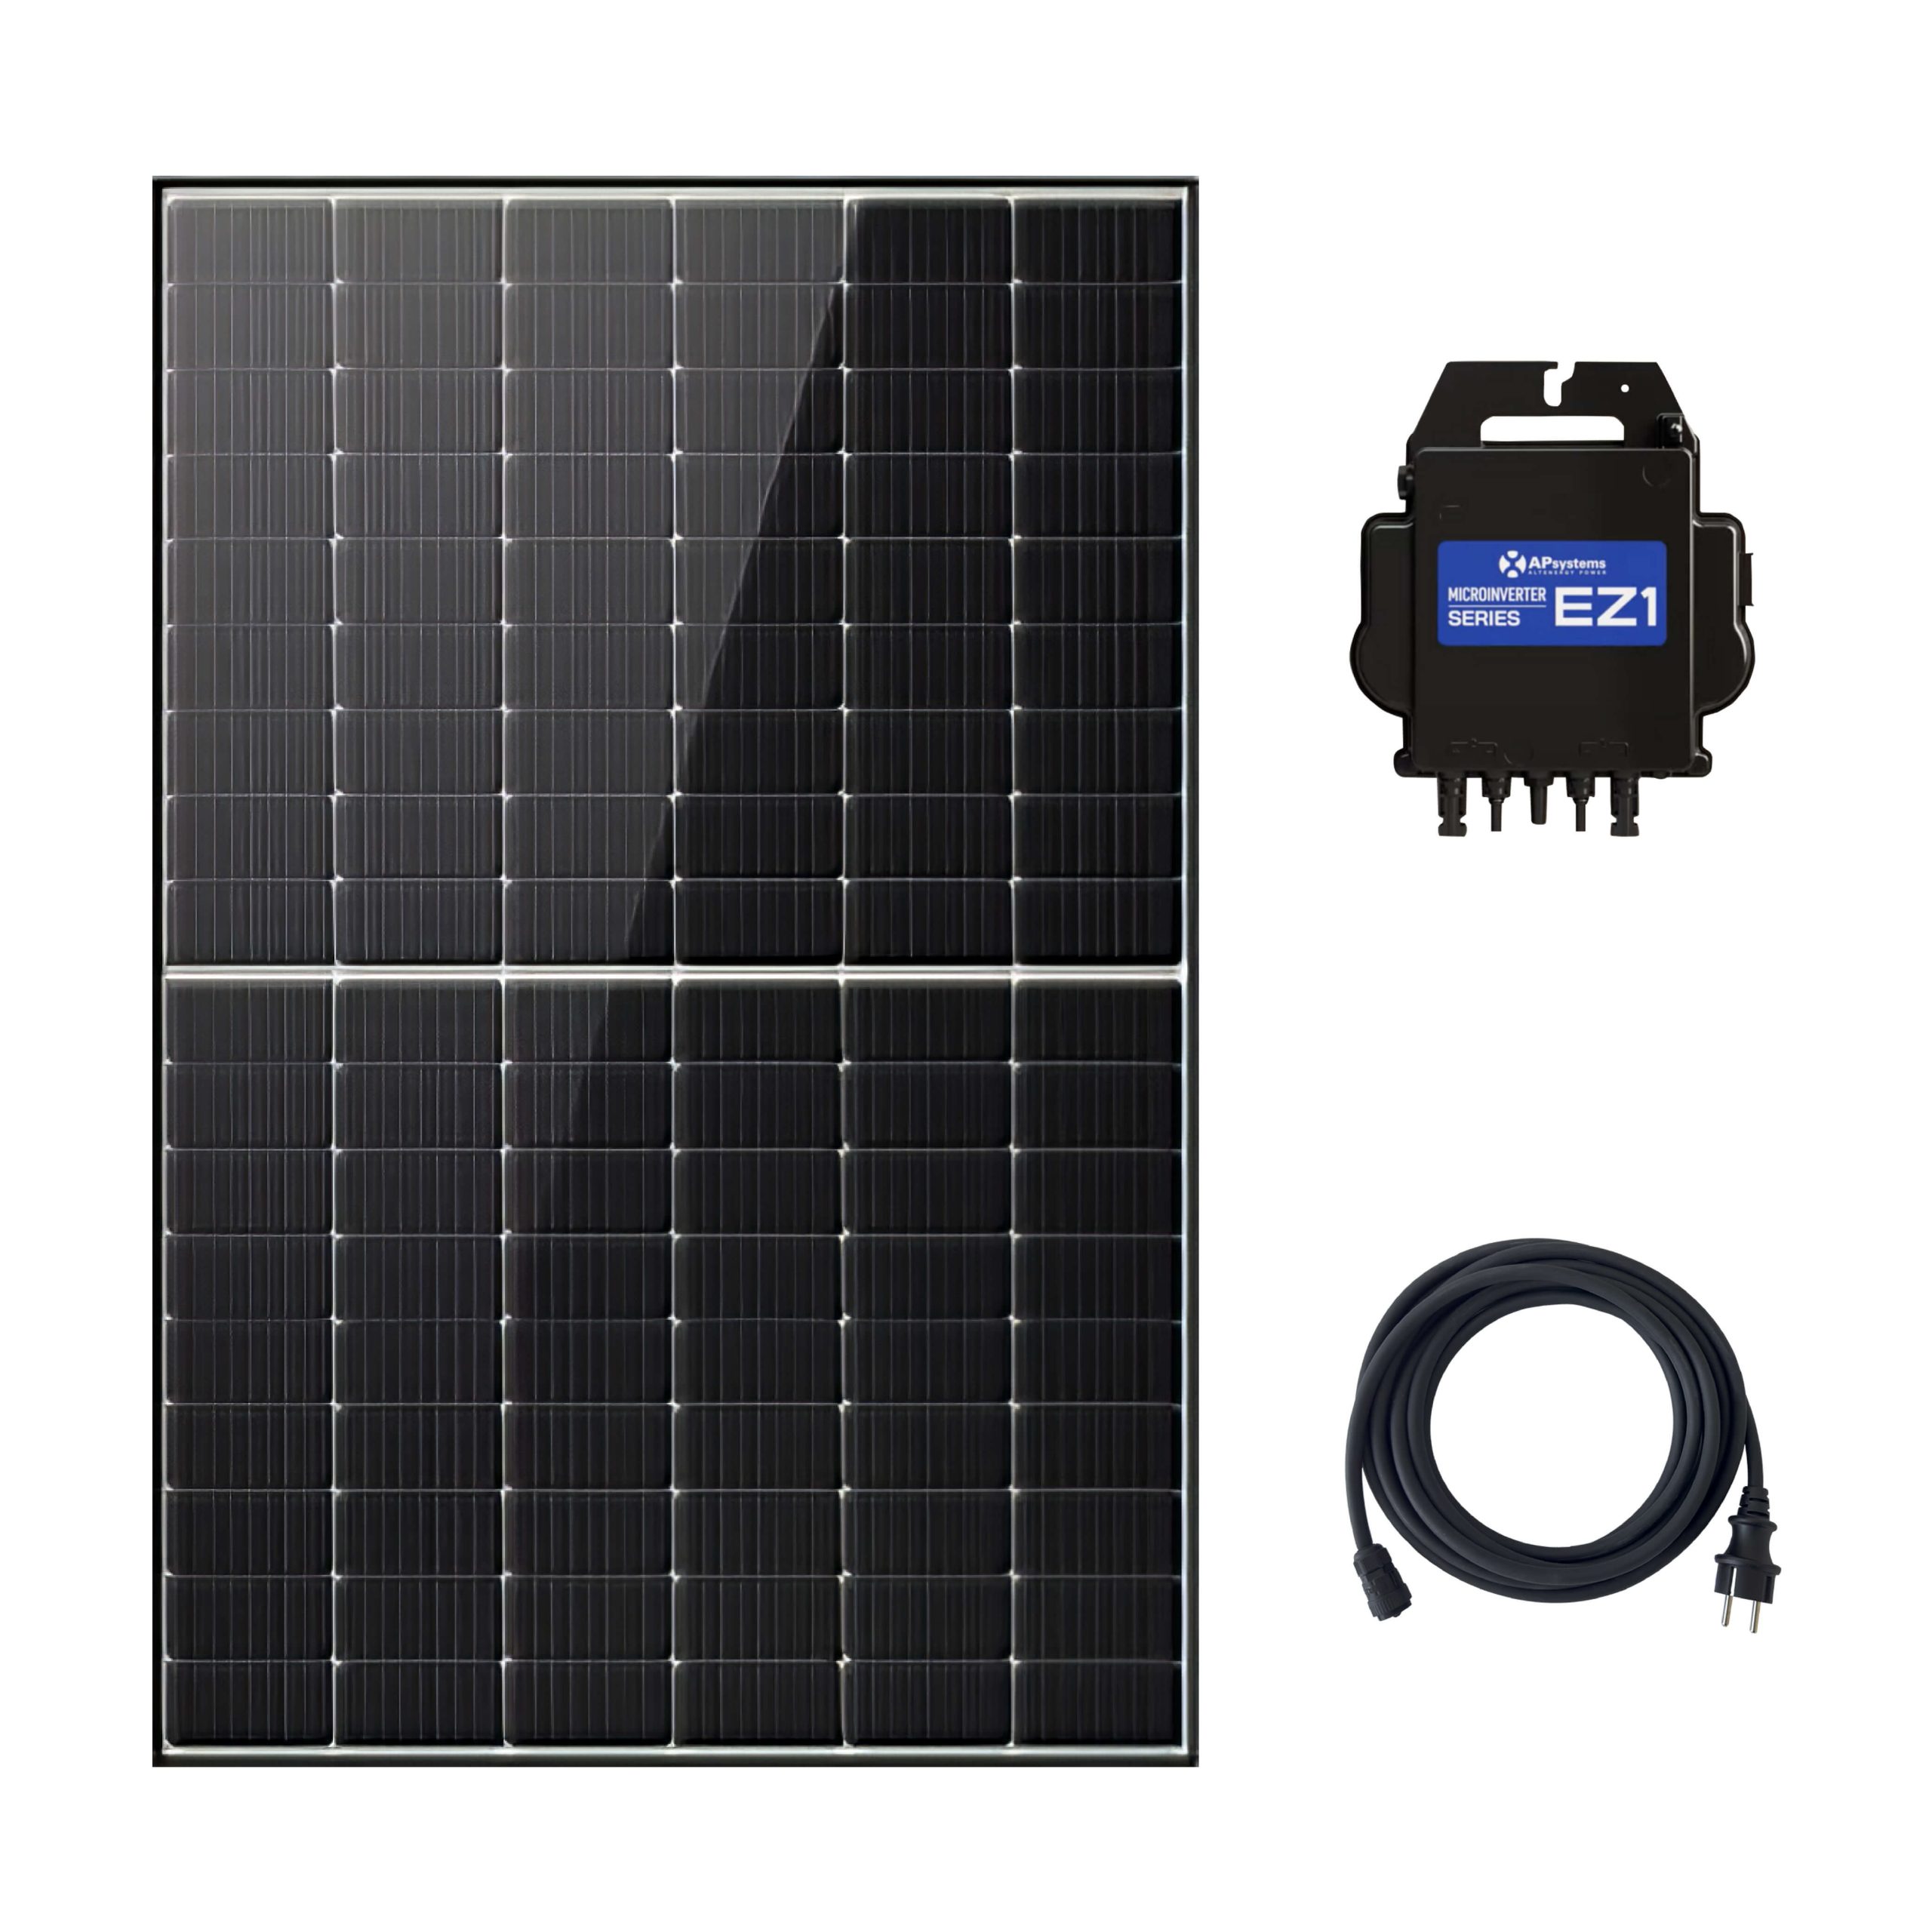 3200 Solaranlage / Photovoltaikanlage - Plug & Play zur Selbstmontage ›  Balkonkraftwerk - Steckdosen-Solaranlage